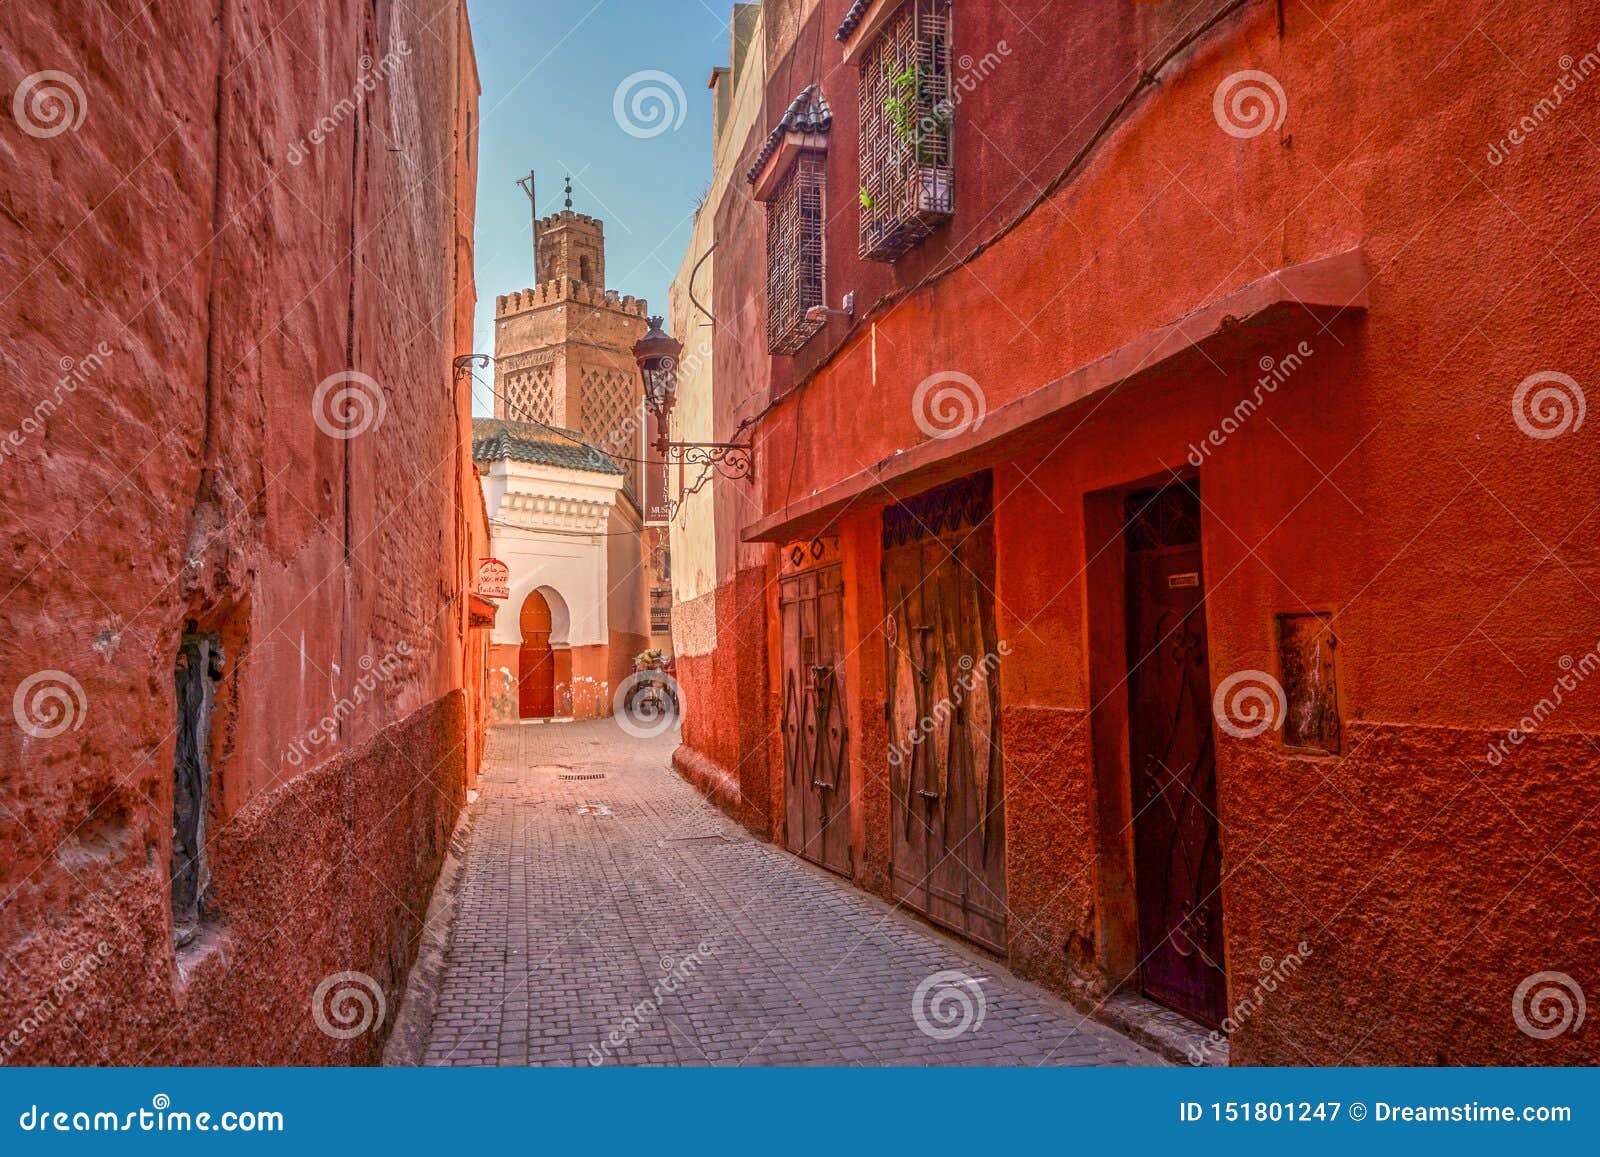 Red Medina of Marrakech, Morocco Photography - Image cityscape: 151801247